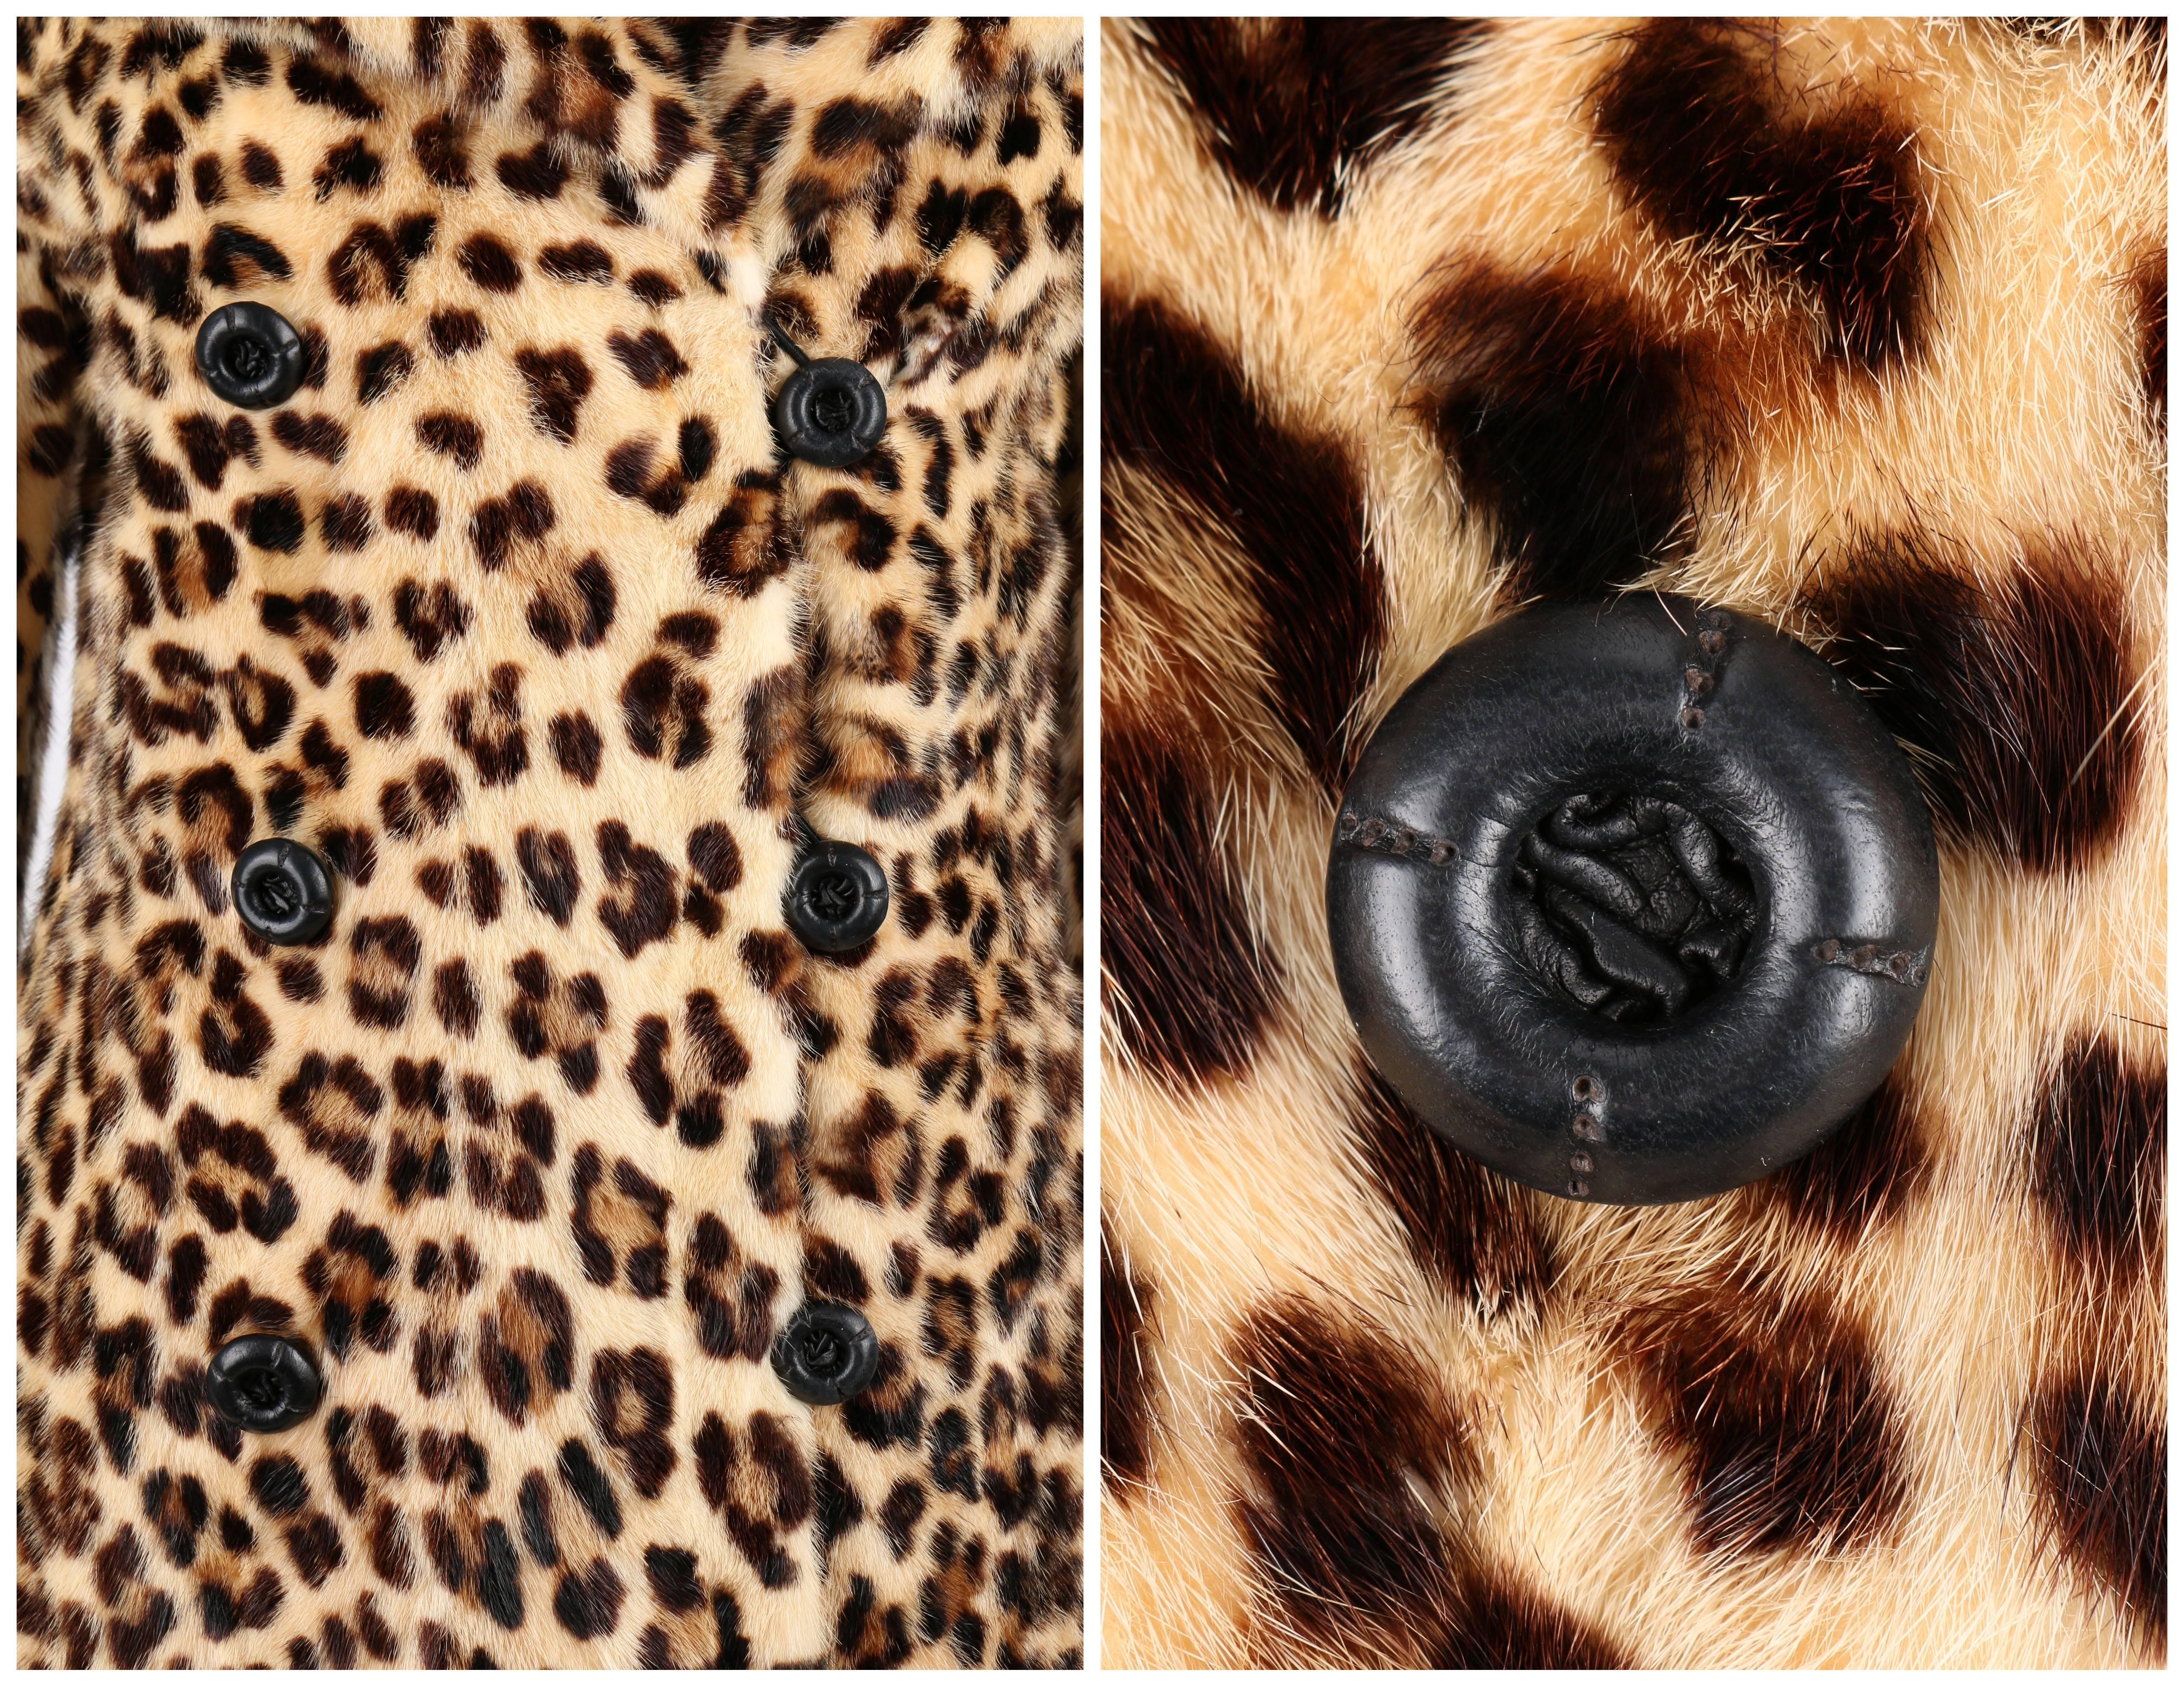 Women's FURS BY WILIBEL Genuine Mink With Leopard Animal Print Princess Coat Jacket